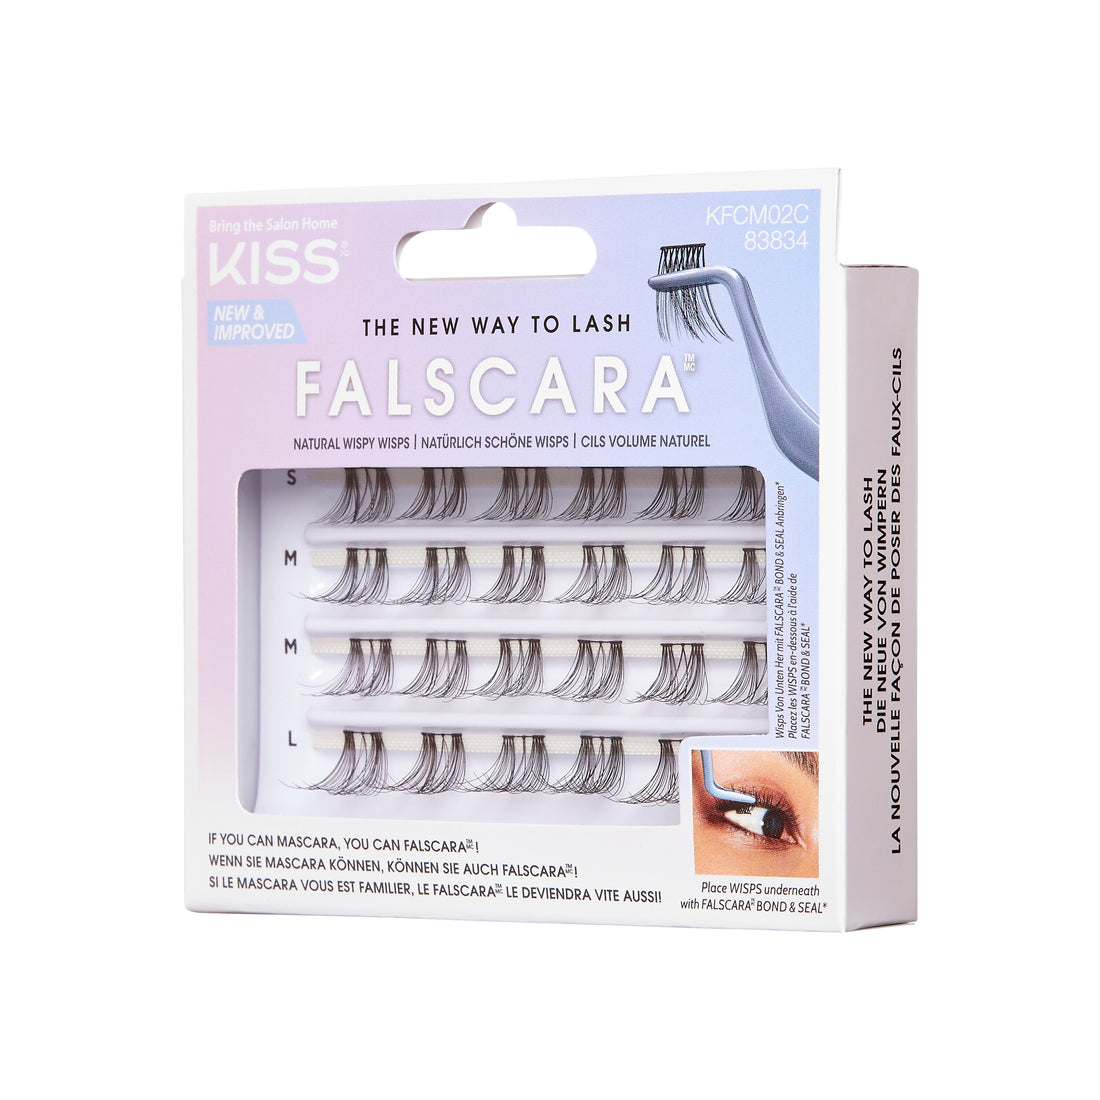 KISS FALSCARA Collection DIY Eyelash Extensions Multi Pack, Natural Wispy Wisps, 24 ks